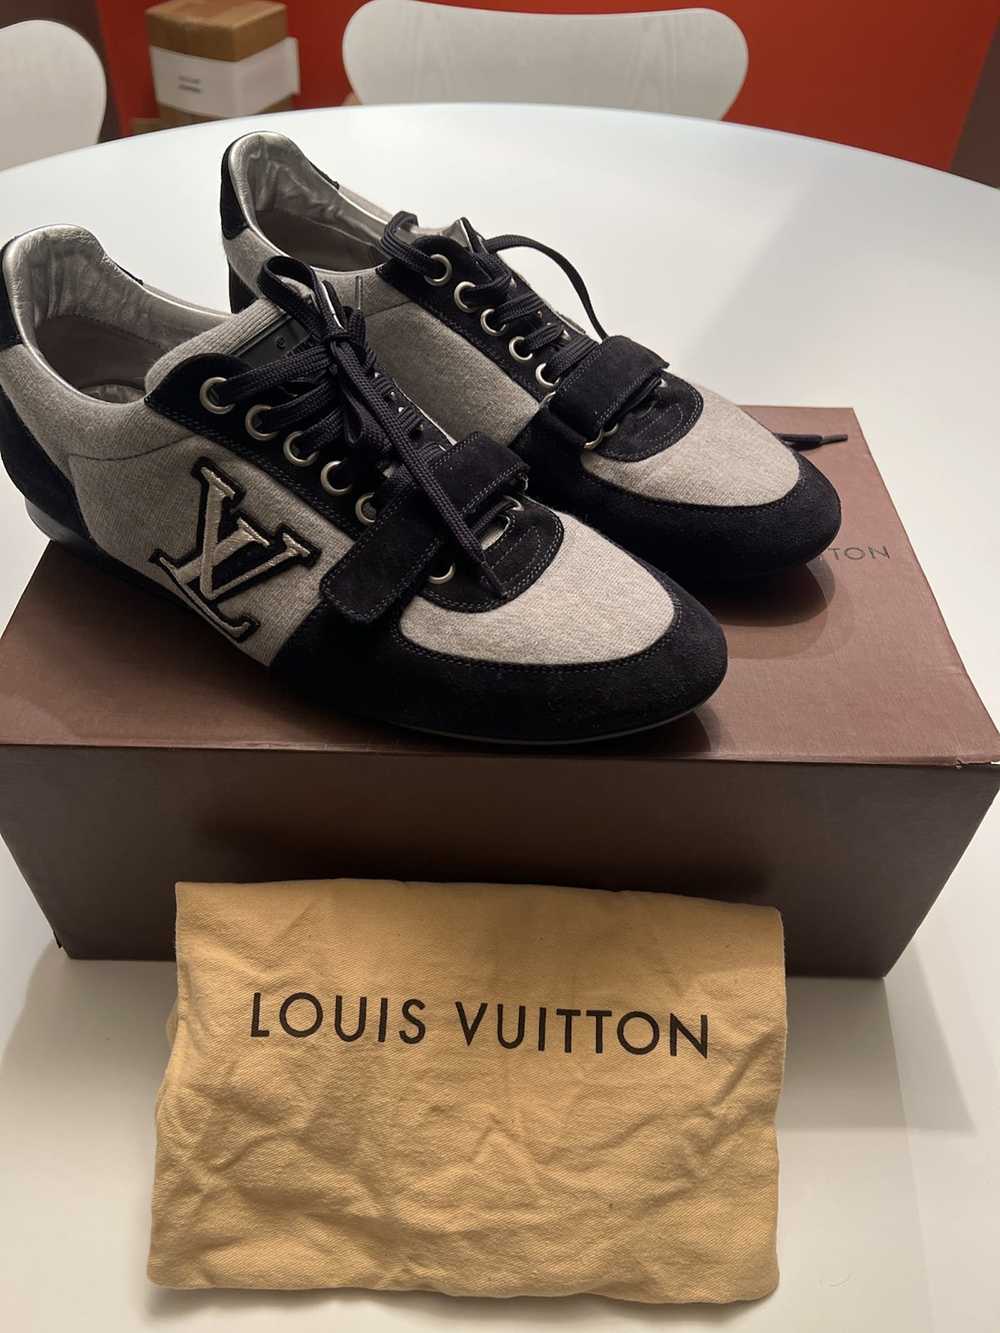 Louis Vuitton Louis Vuitton sneakers - image 2